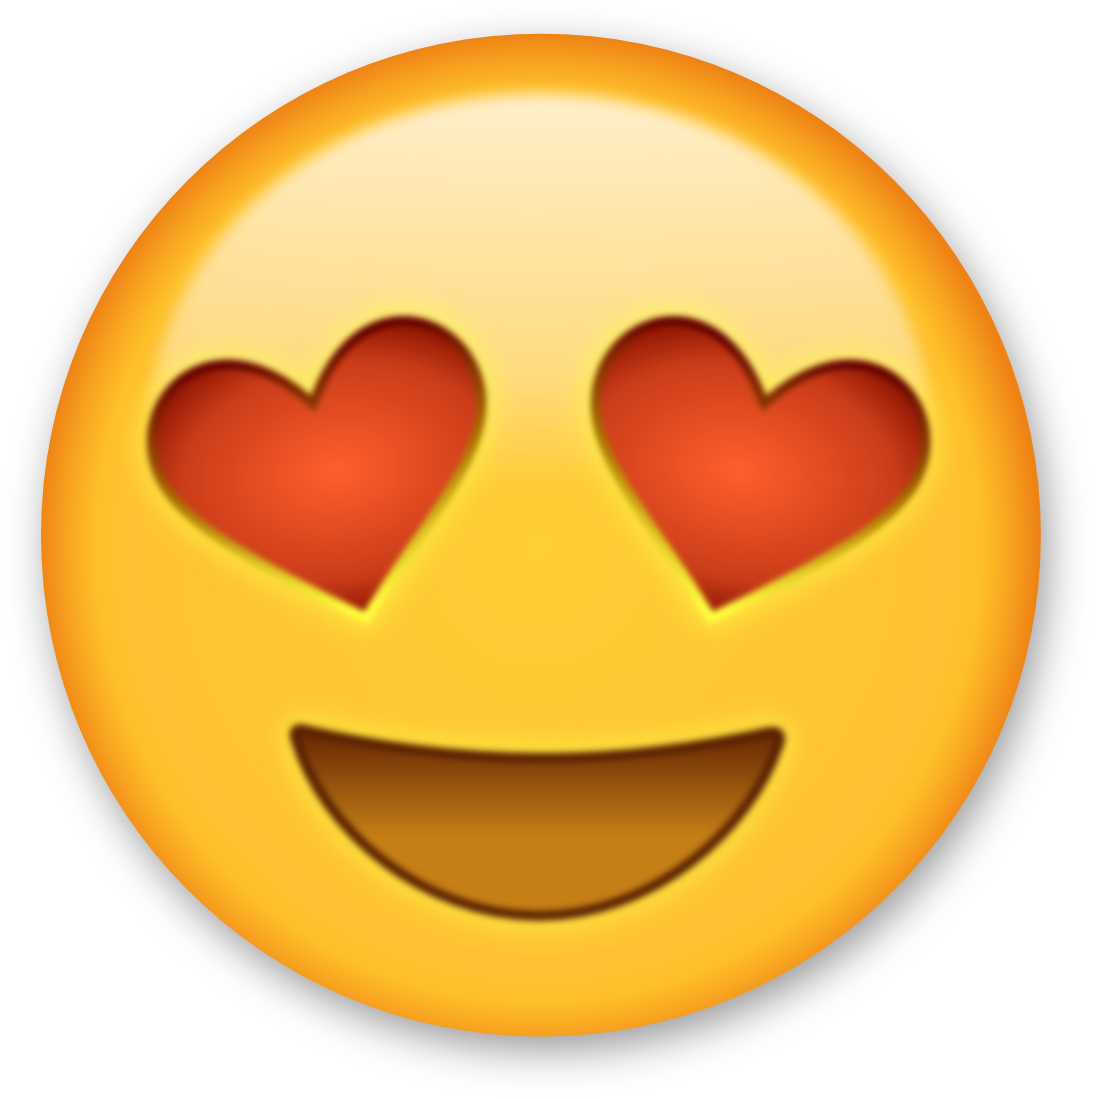 Free download love emoji image photo picture [1096x1099]